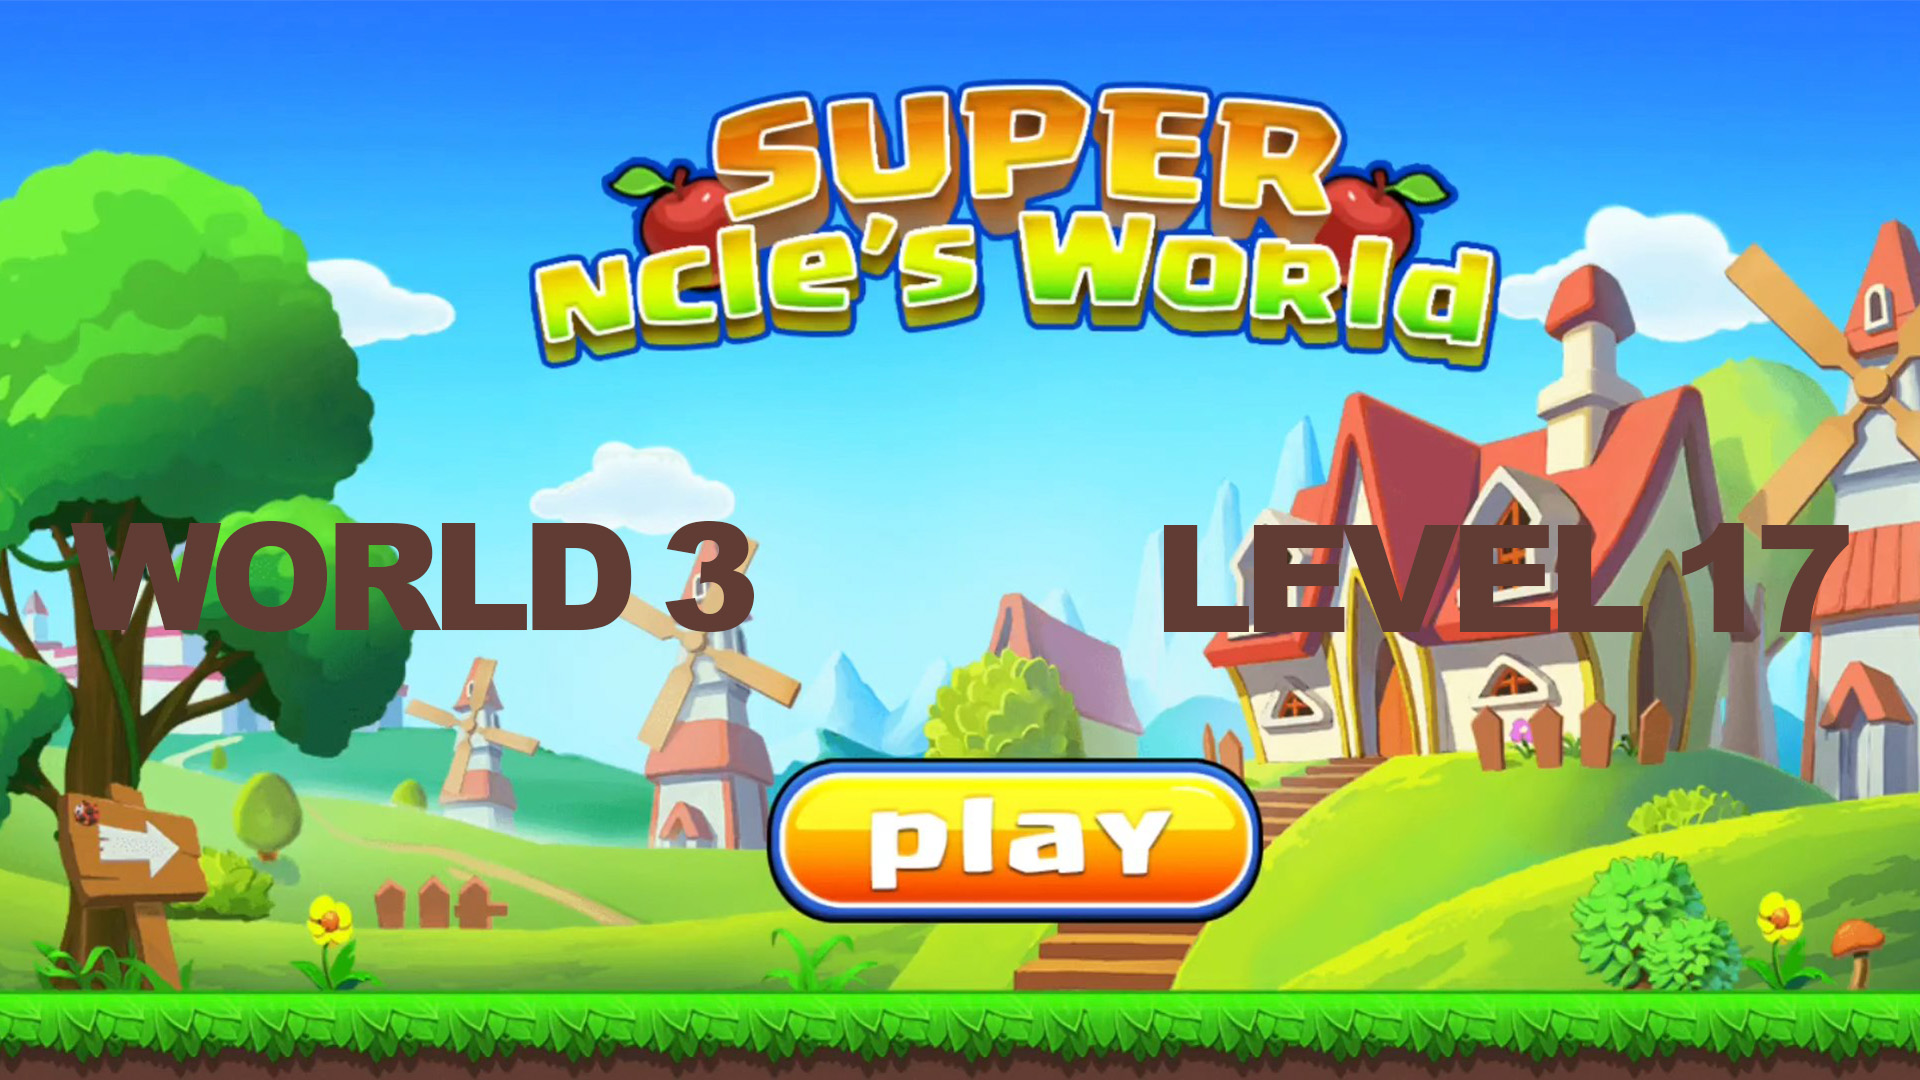 Super ncle's  World 3. Level 17.